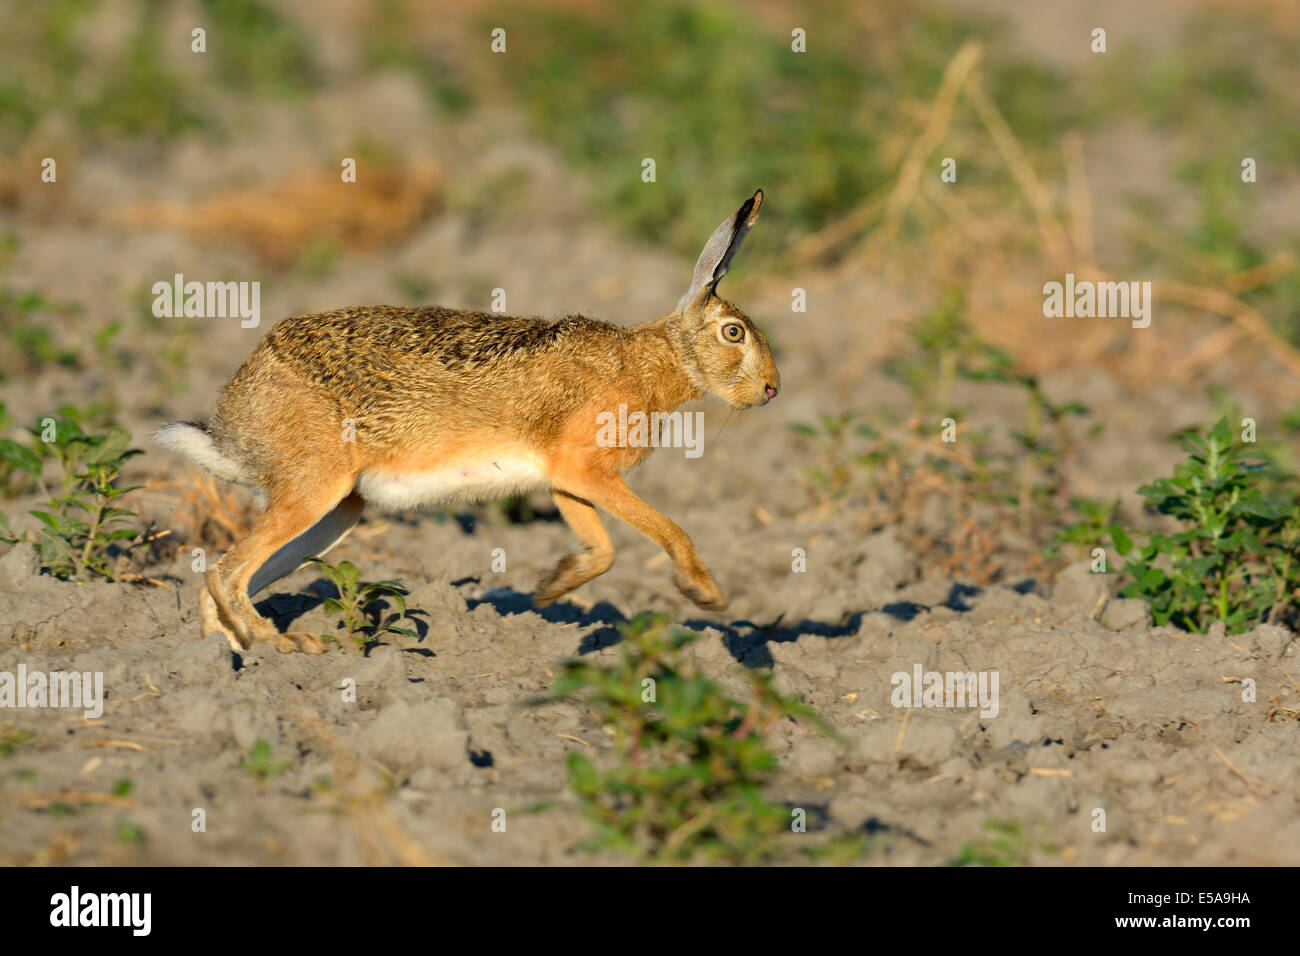 European Hare (Lepus europaeus) scampering on a harvested sunflower field, Kiskunsági National Park, Hungary Stock Photo